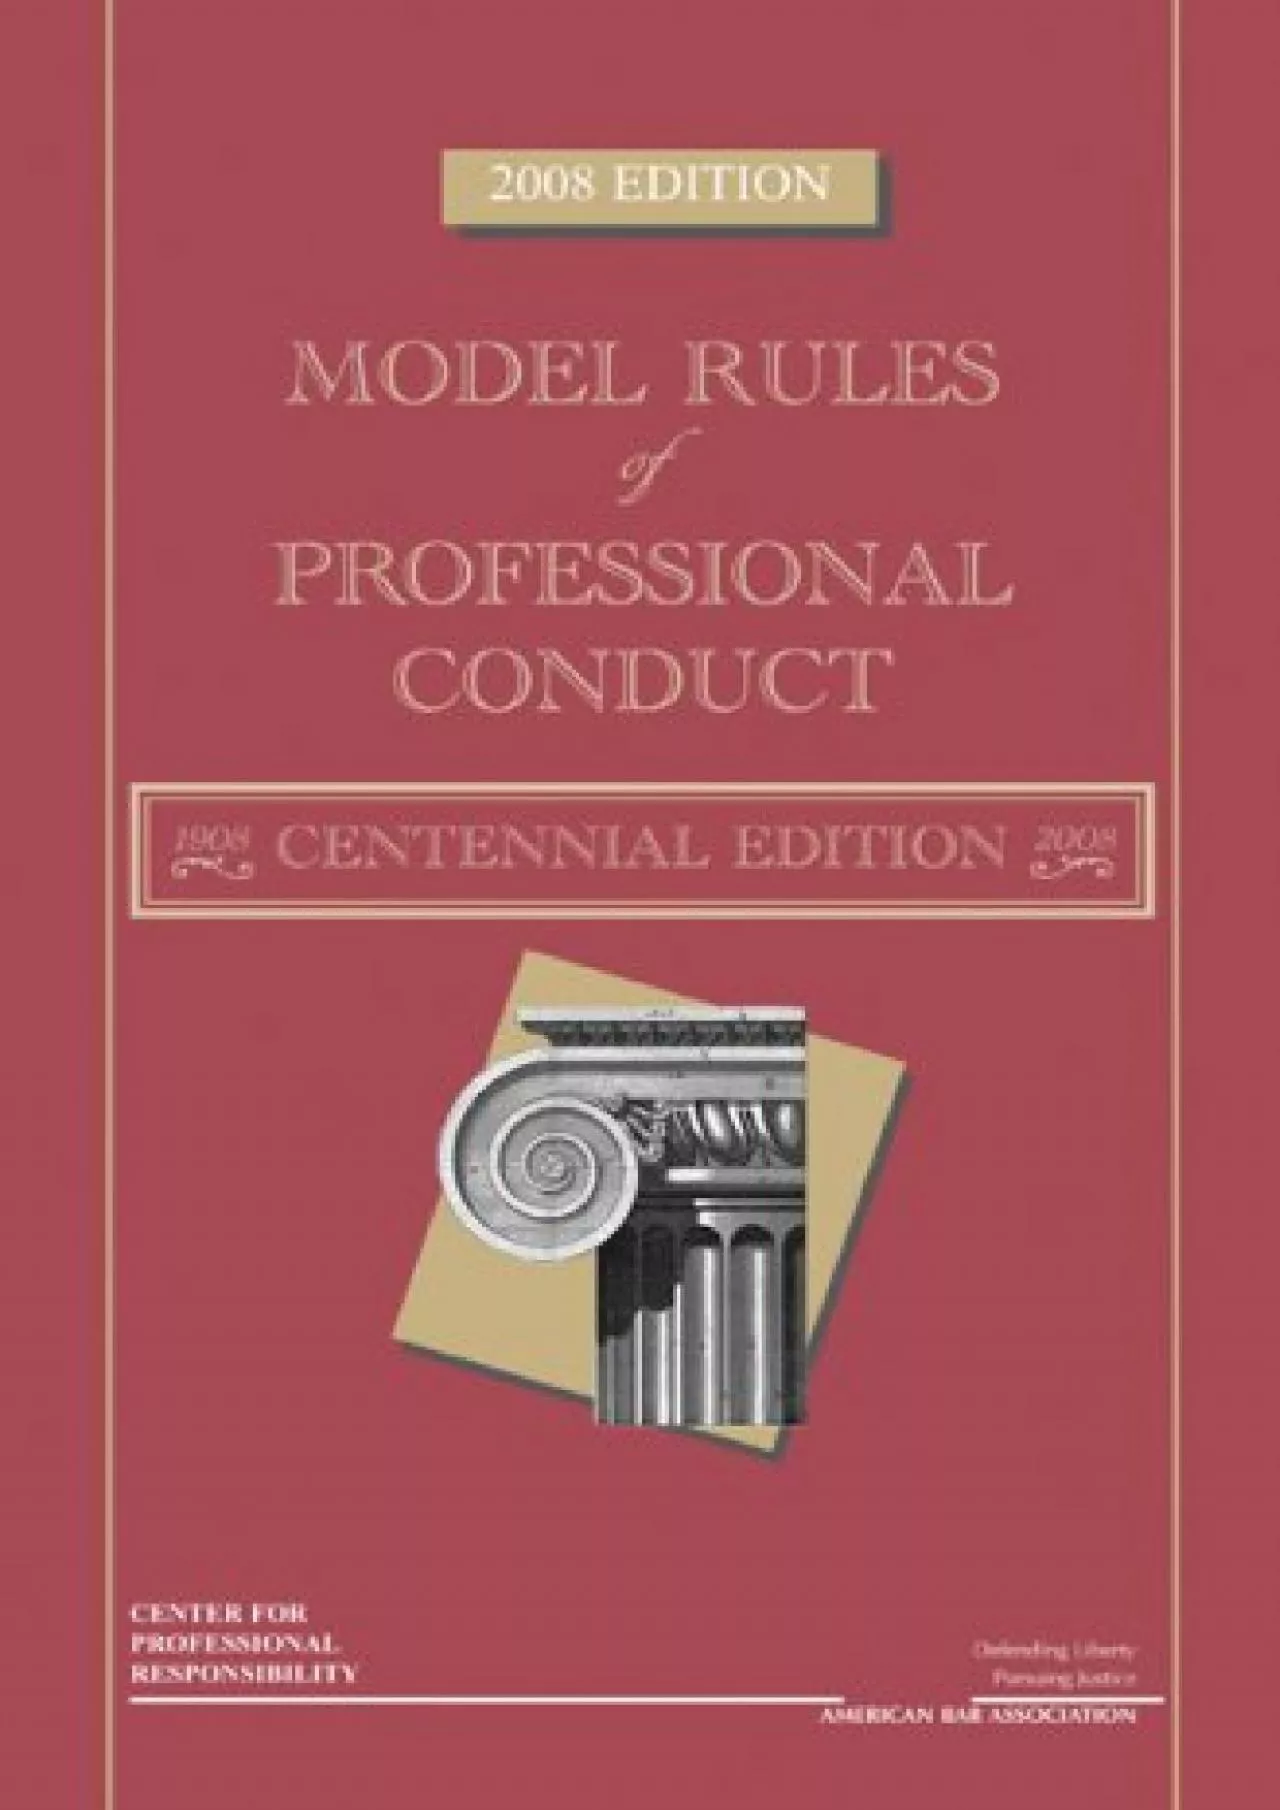 Read ebook [PDF] Model Rules of Professional Conduct, 2008